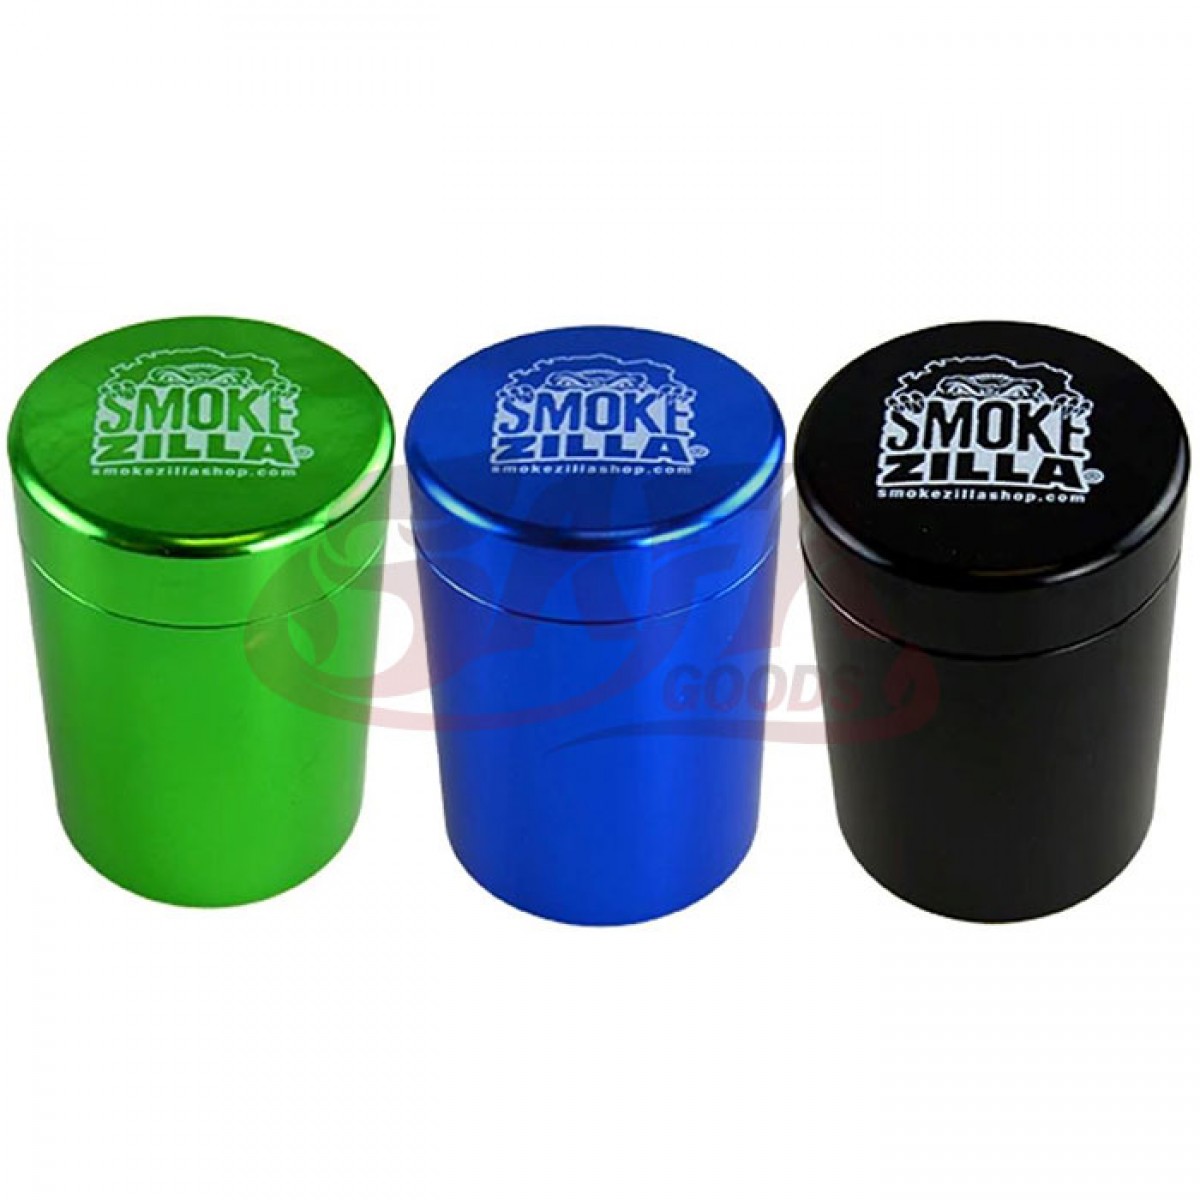 Smokezilla Storage Jar Display Boxes